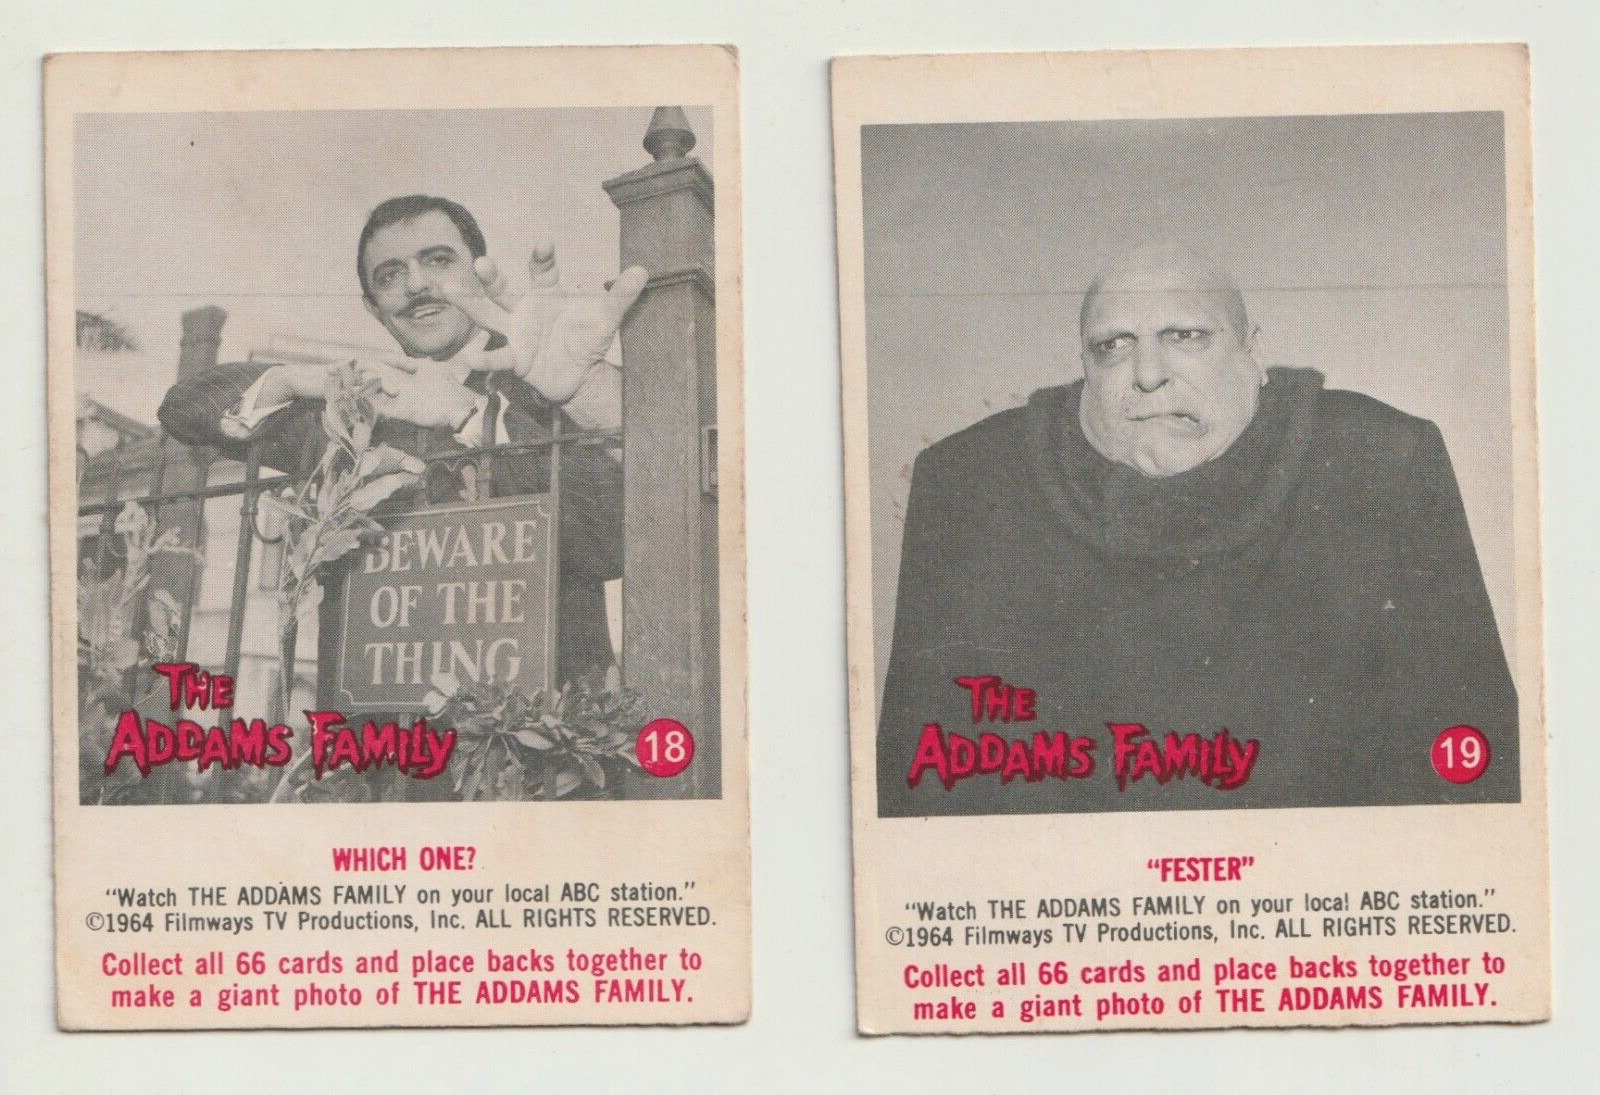 VINTAGE 1964 ADDAMS FAMILY TV SHOW SCANLENS DONRUSS TRADING CARDS 18 19 fester